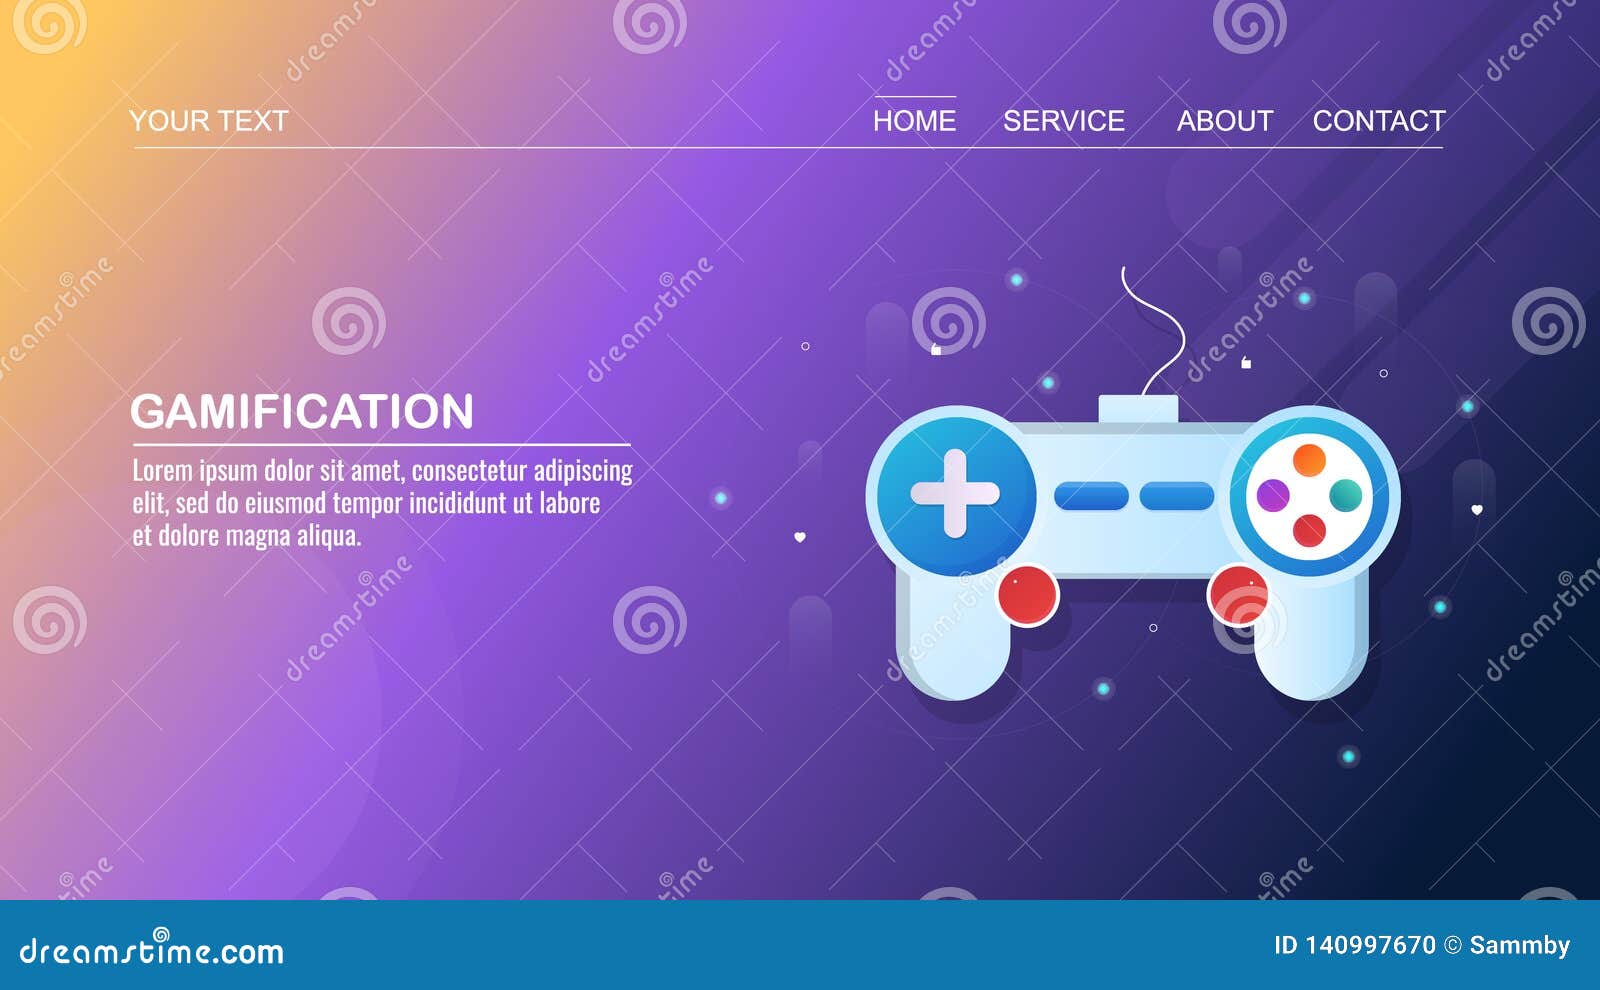 Retro games website concept banner design Vector Image